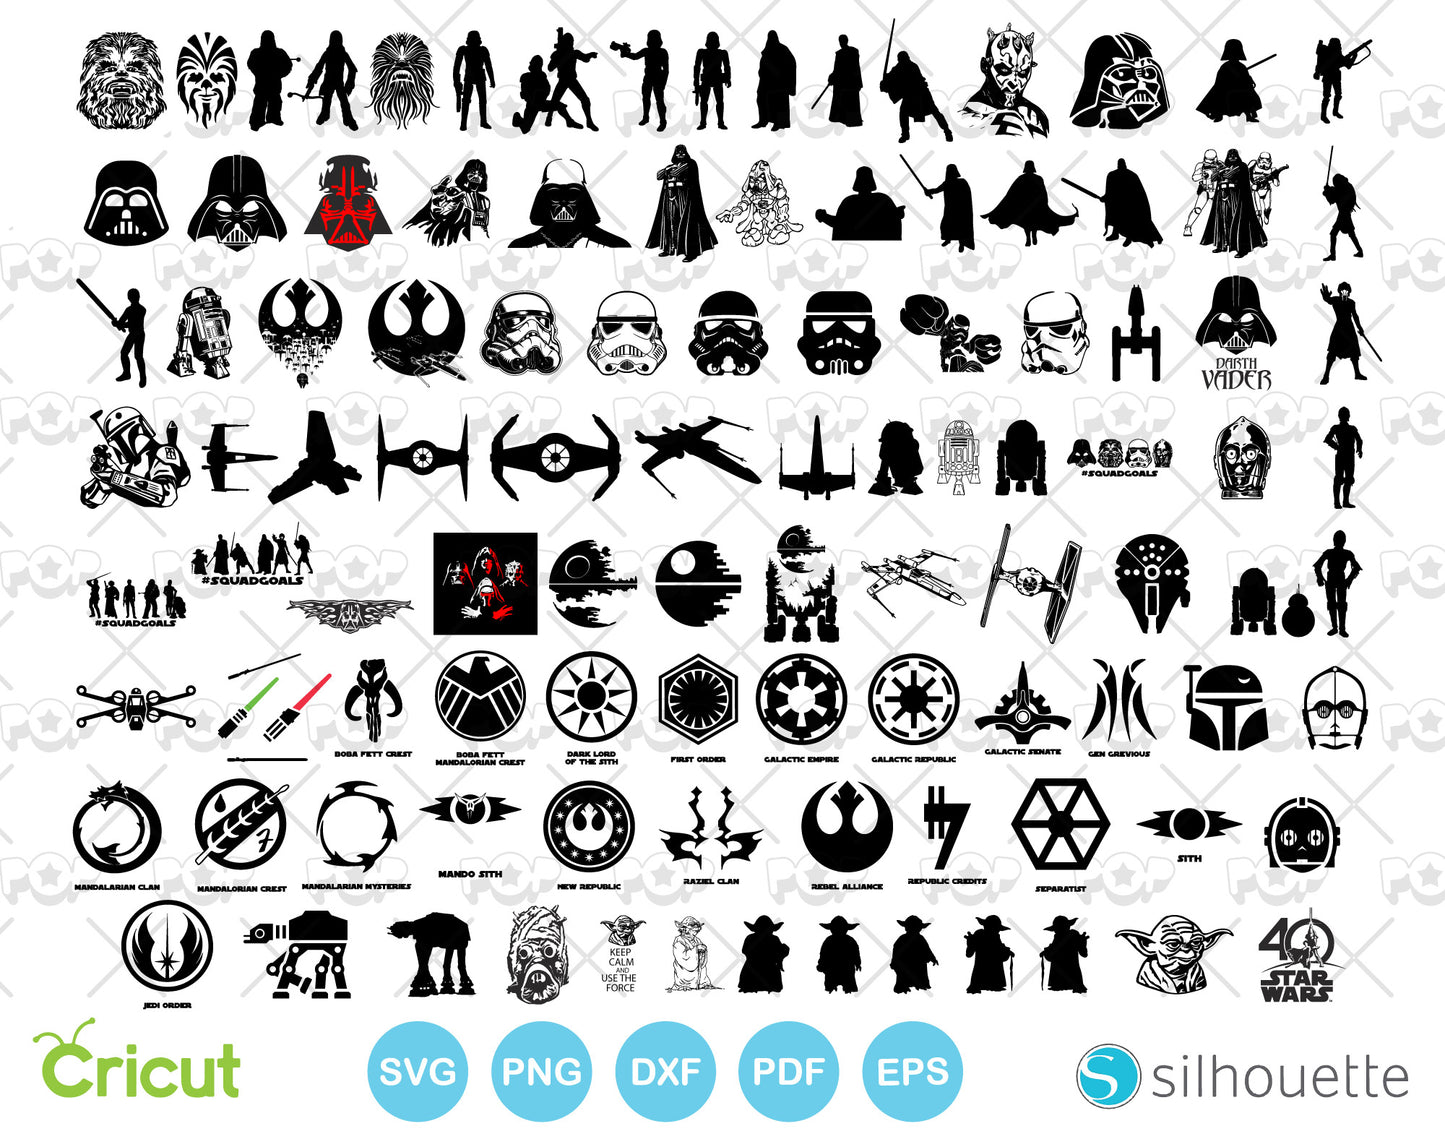 Star Wars mega clipart bundle, SVG cut files for Cricut / Silhouette, Star Wars designs for sublimation, instant download